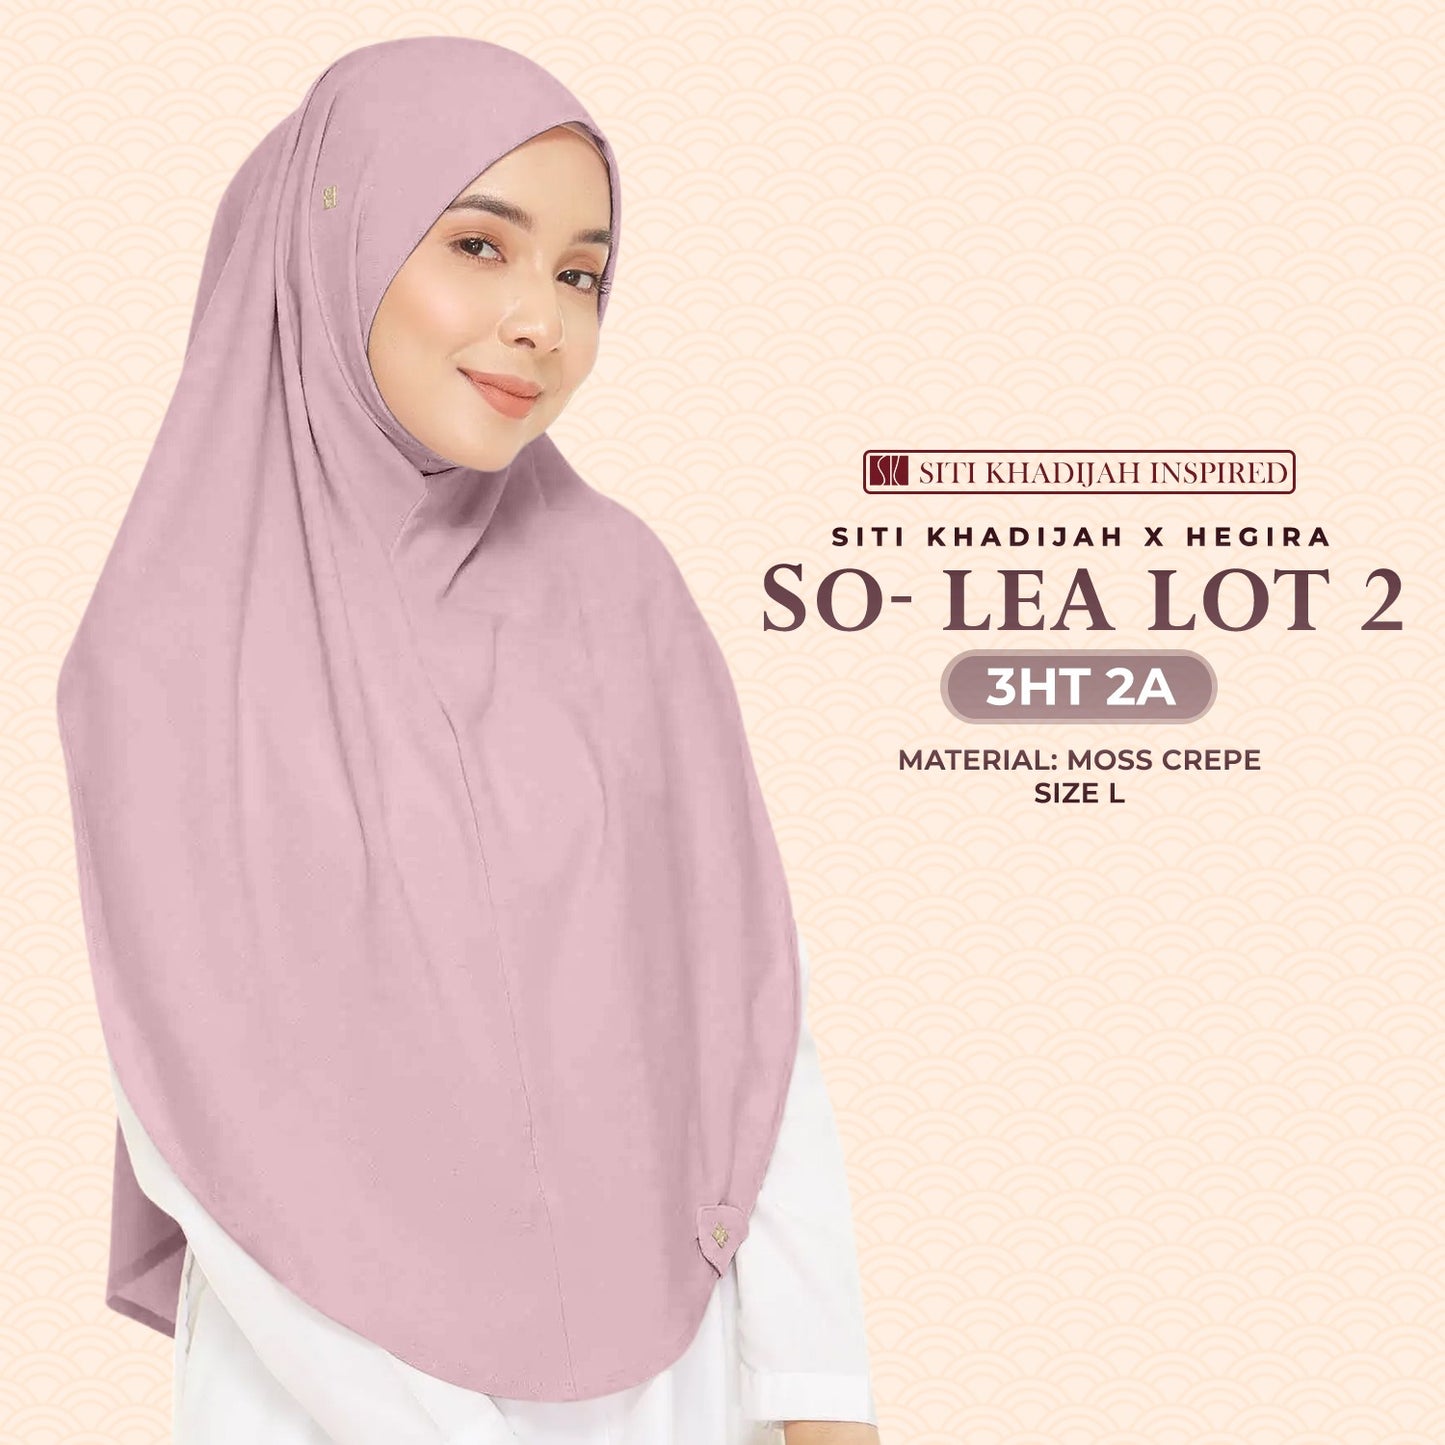 Siti Khadijah X Hegira So-Lea Lot 2 Tudung Collection